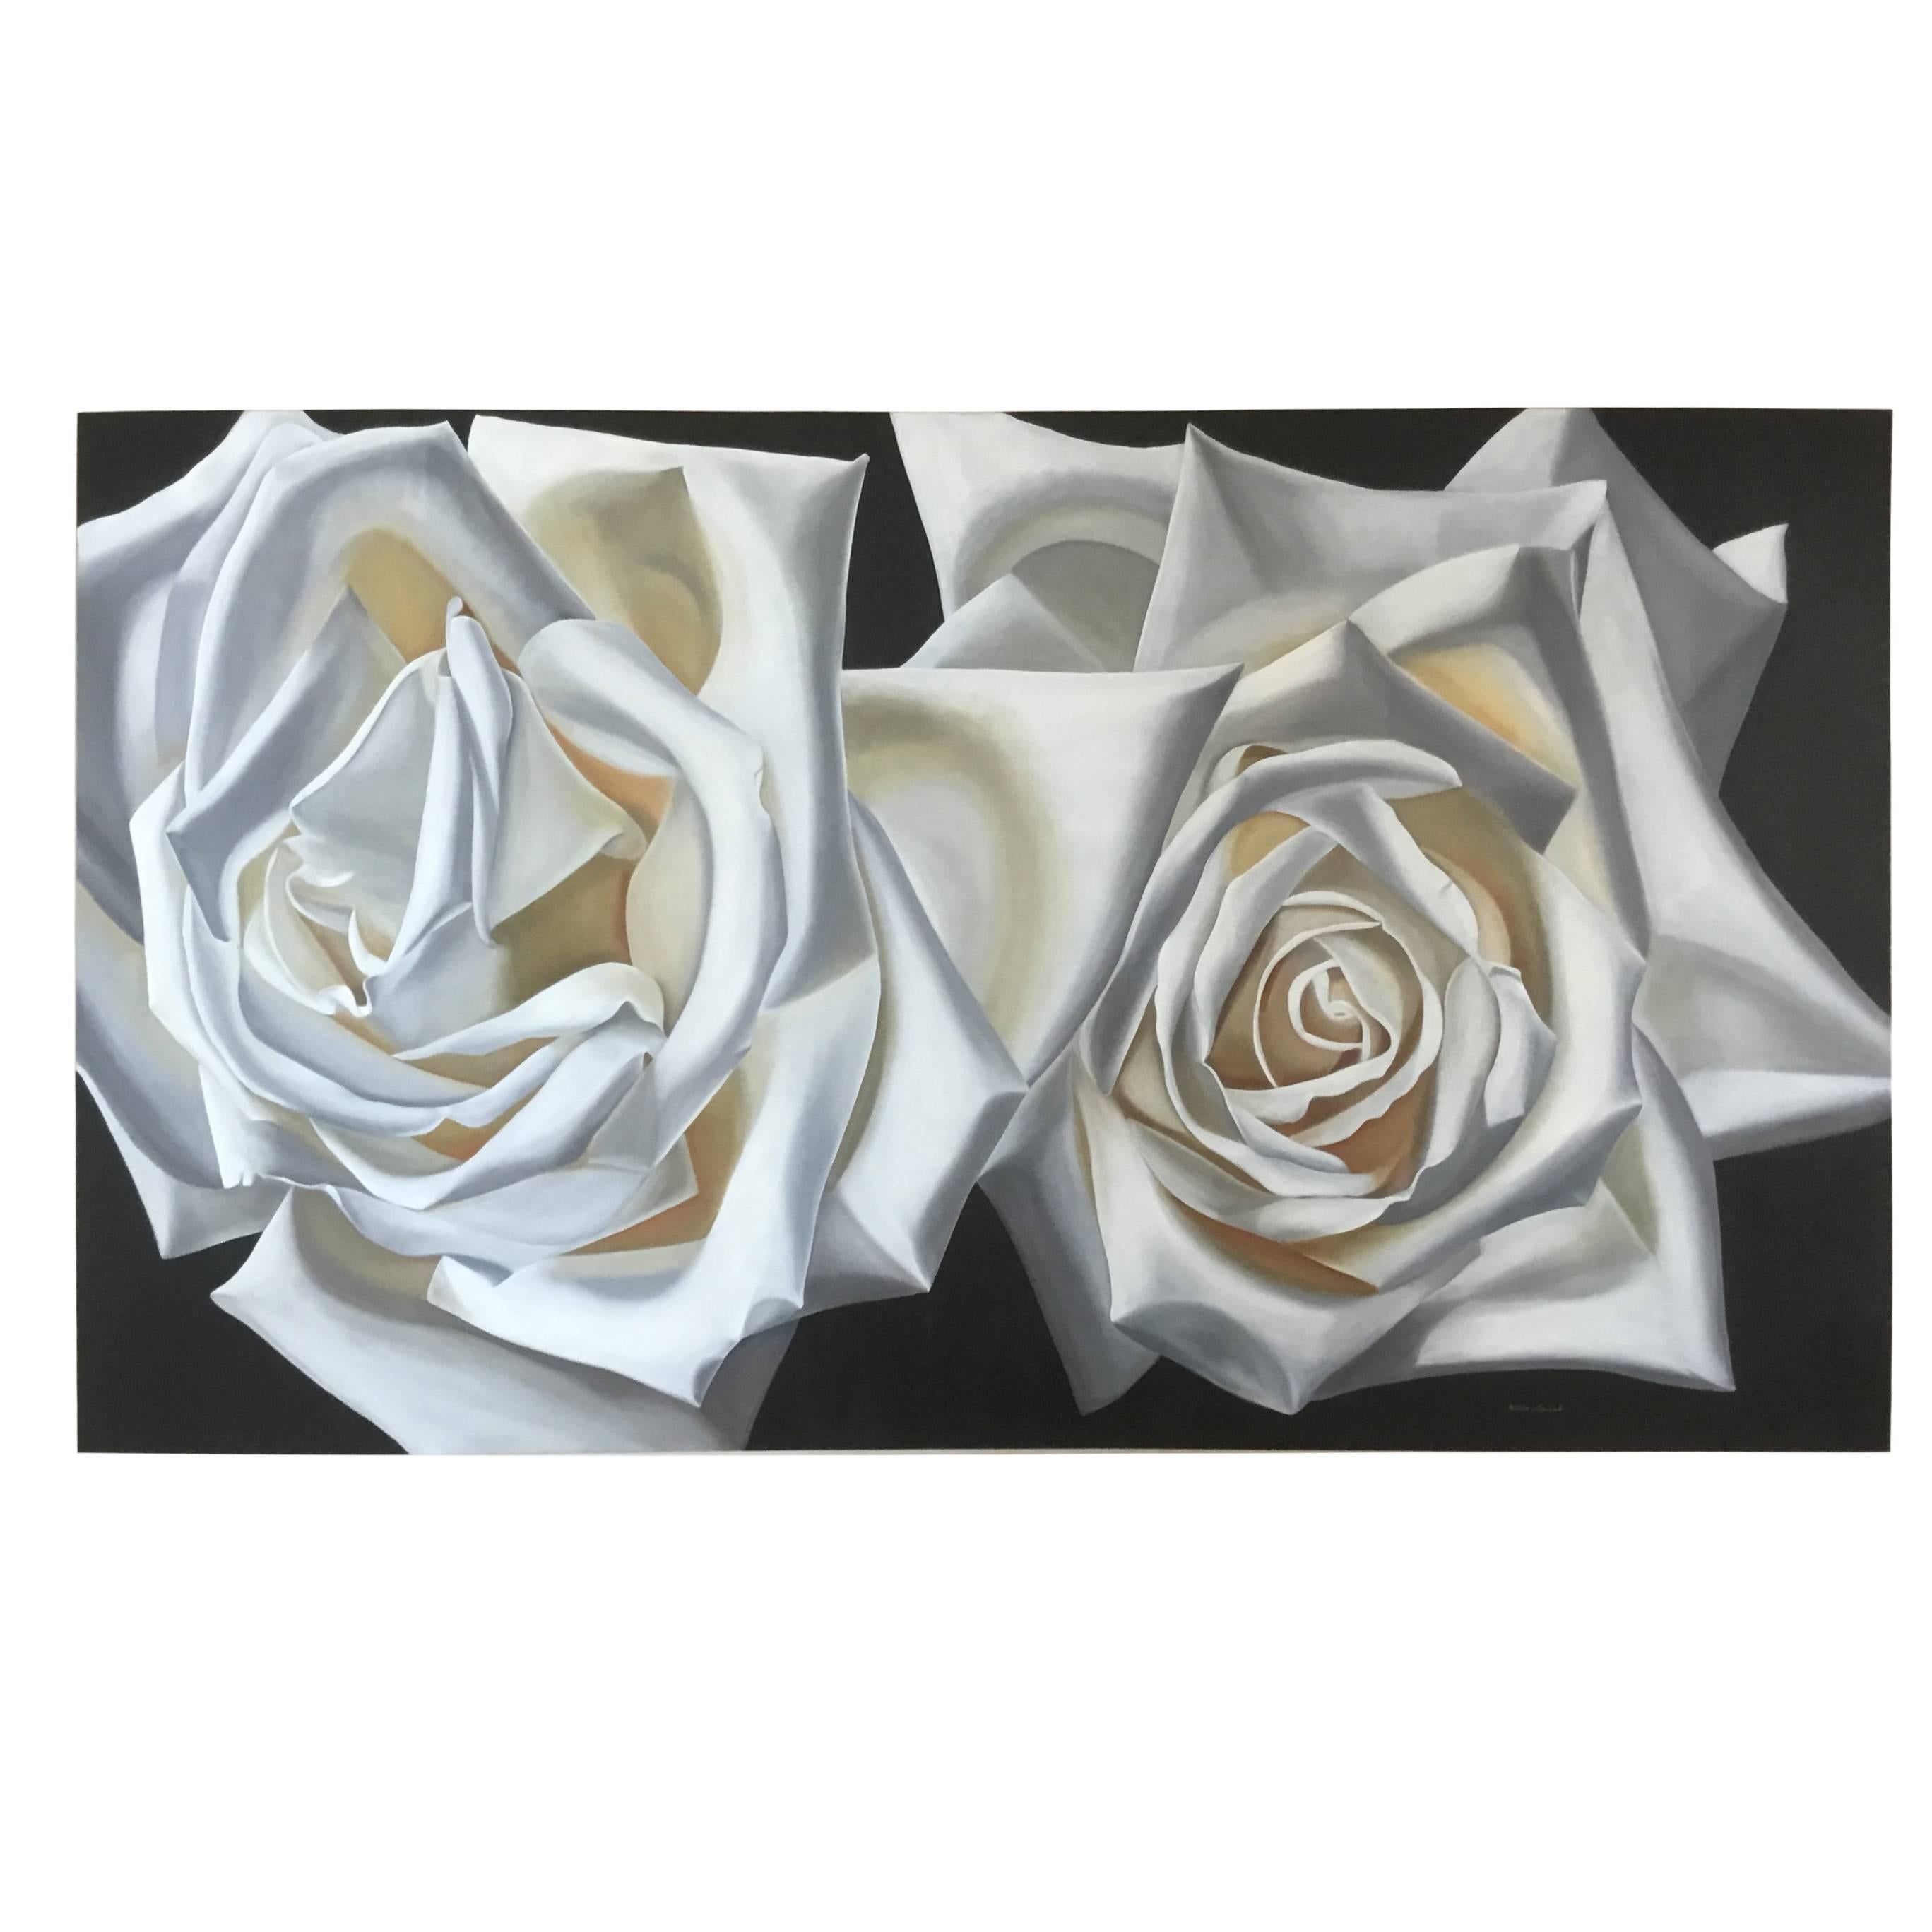 Willa Spivak "Large Roses" Oil on Canvas